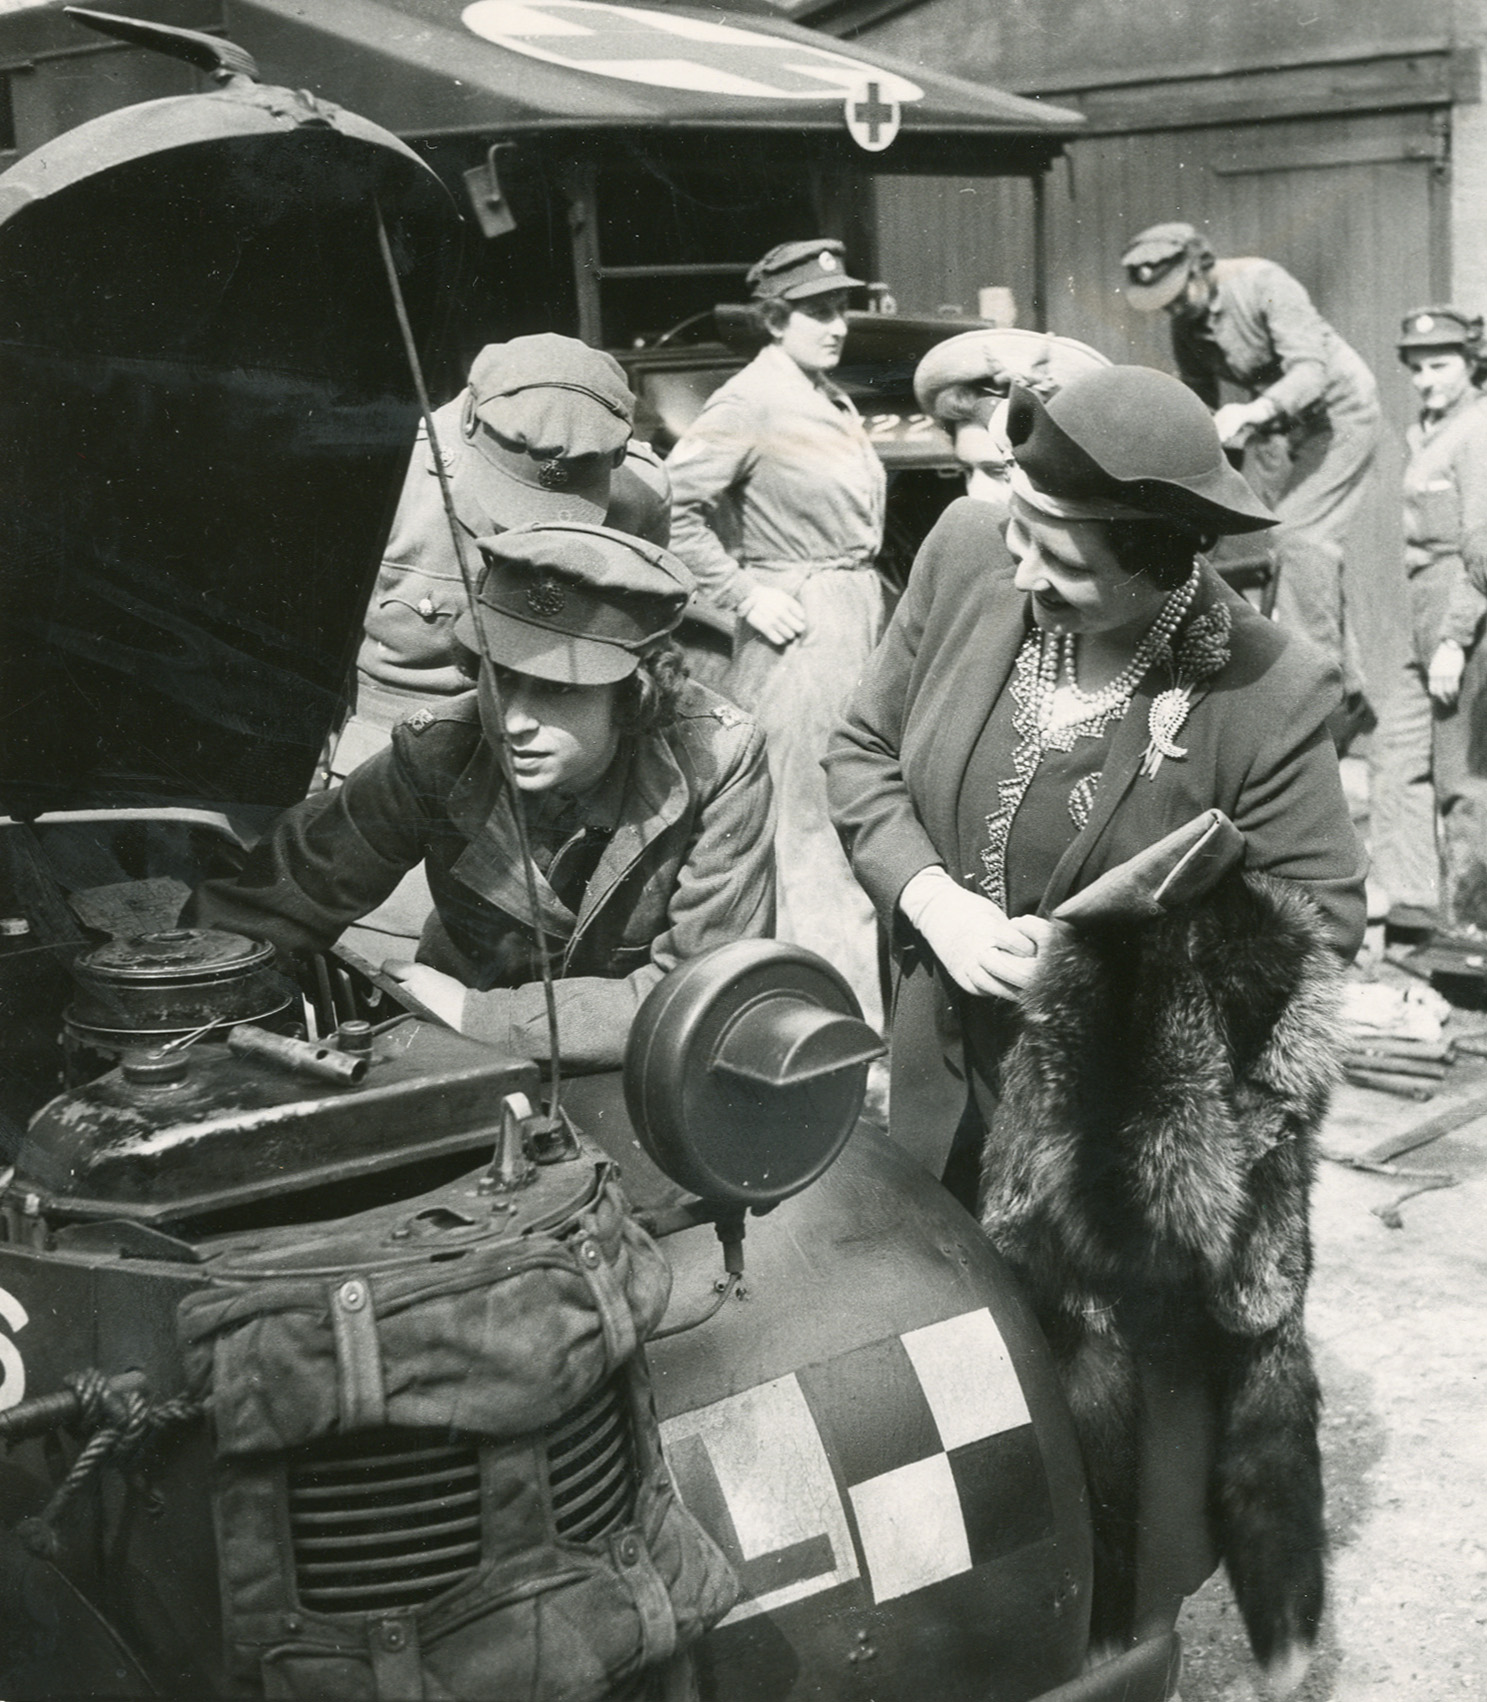 Queen Elizabeth II at work during WWII